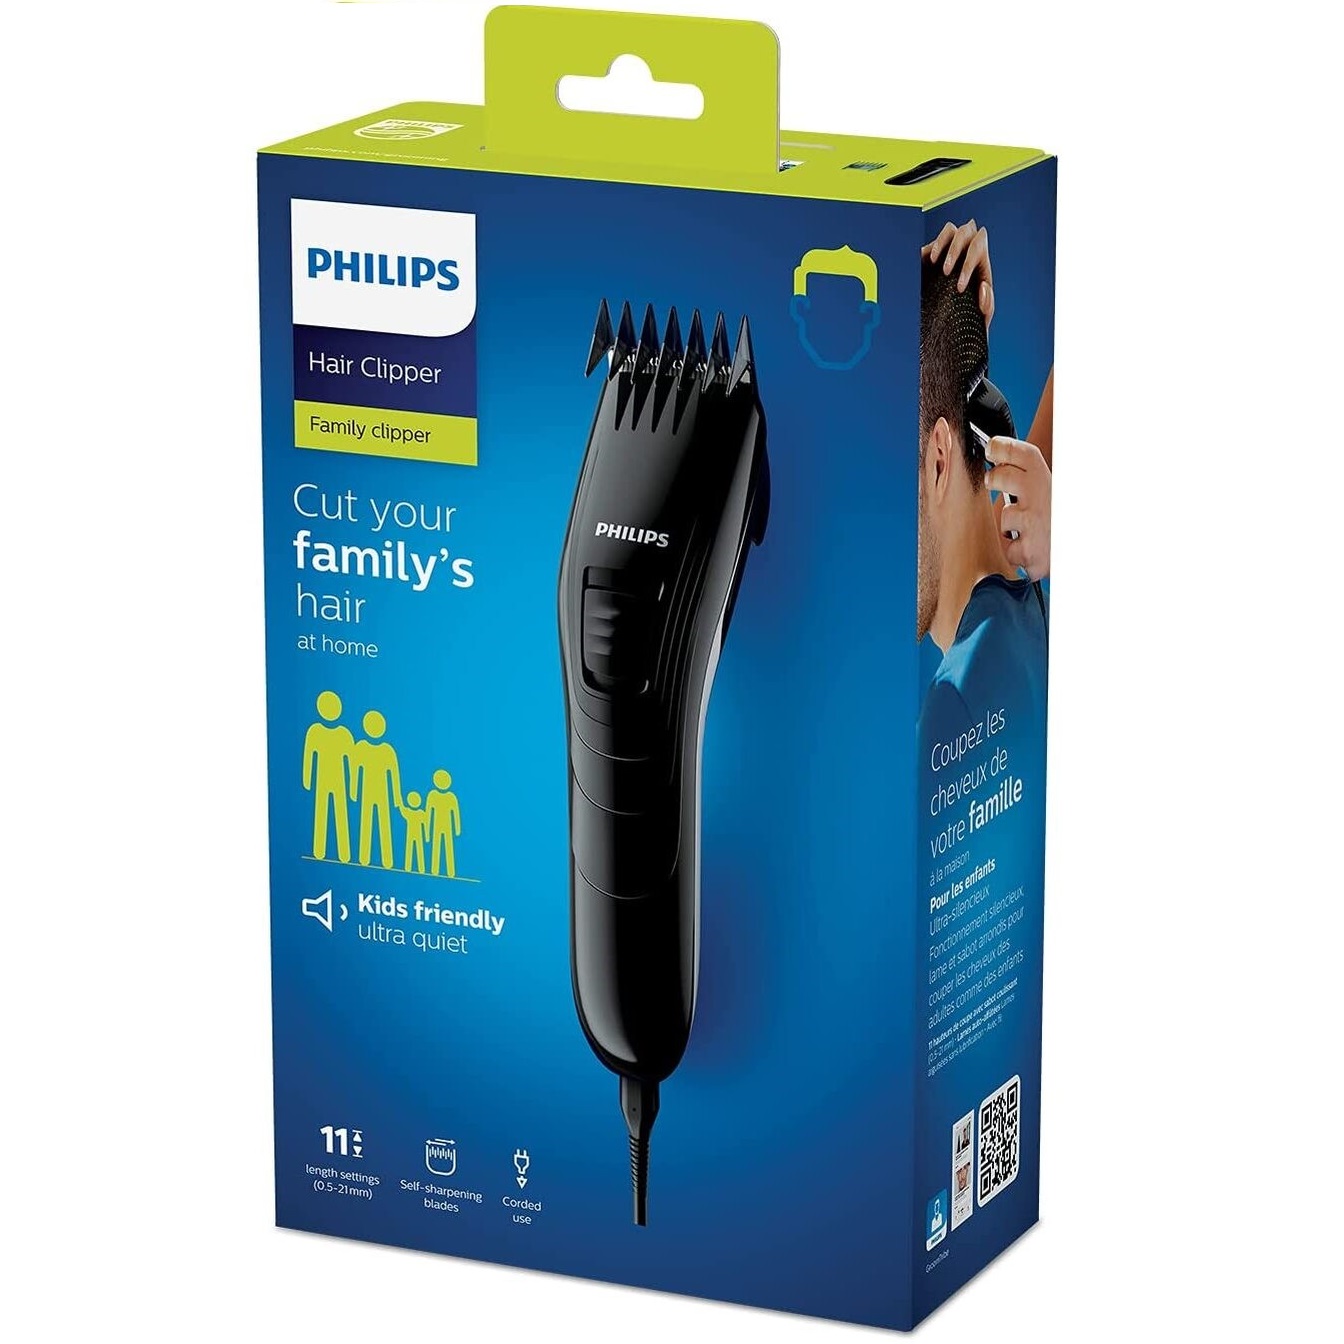 Philips Family Hair Clipper - Black Image 1